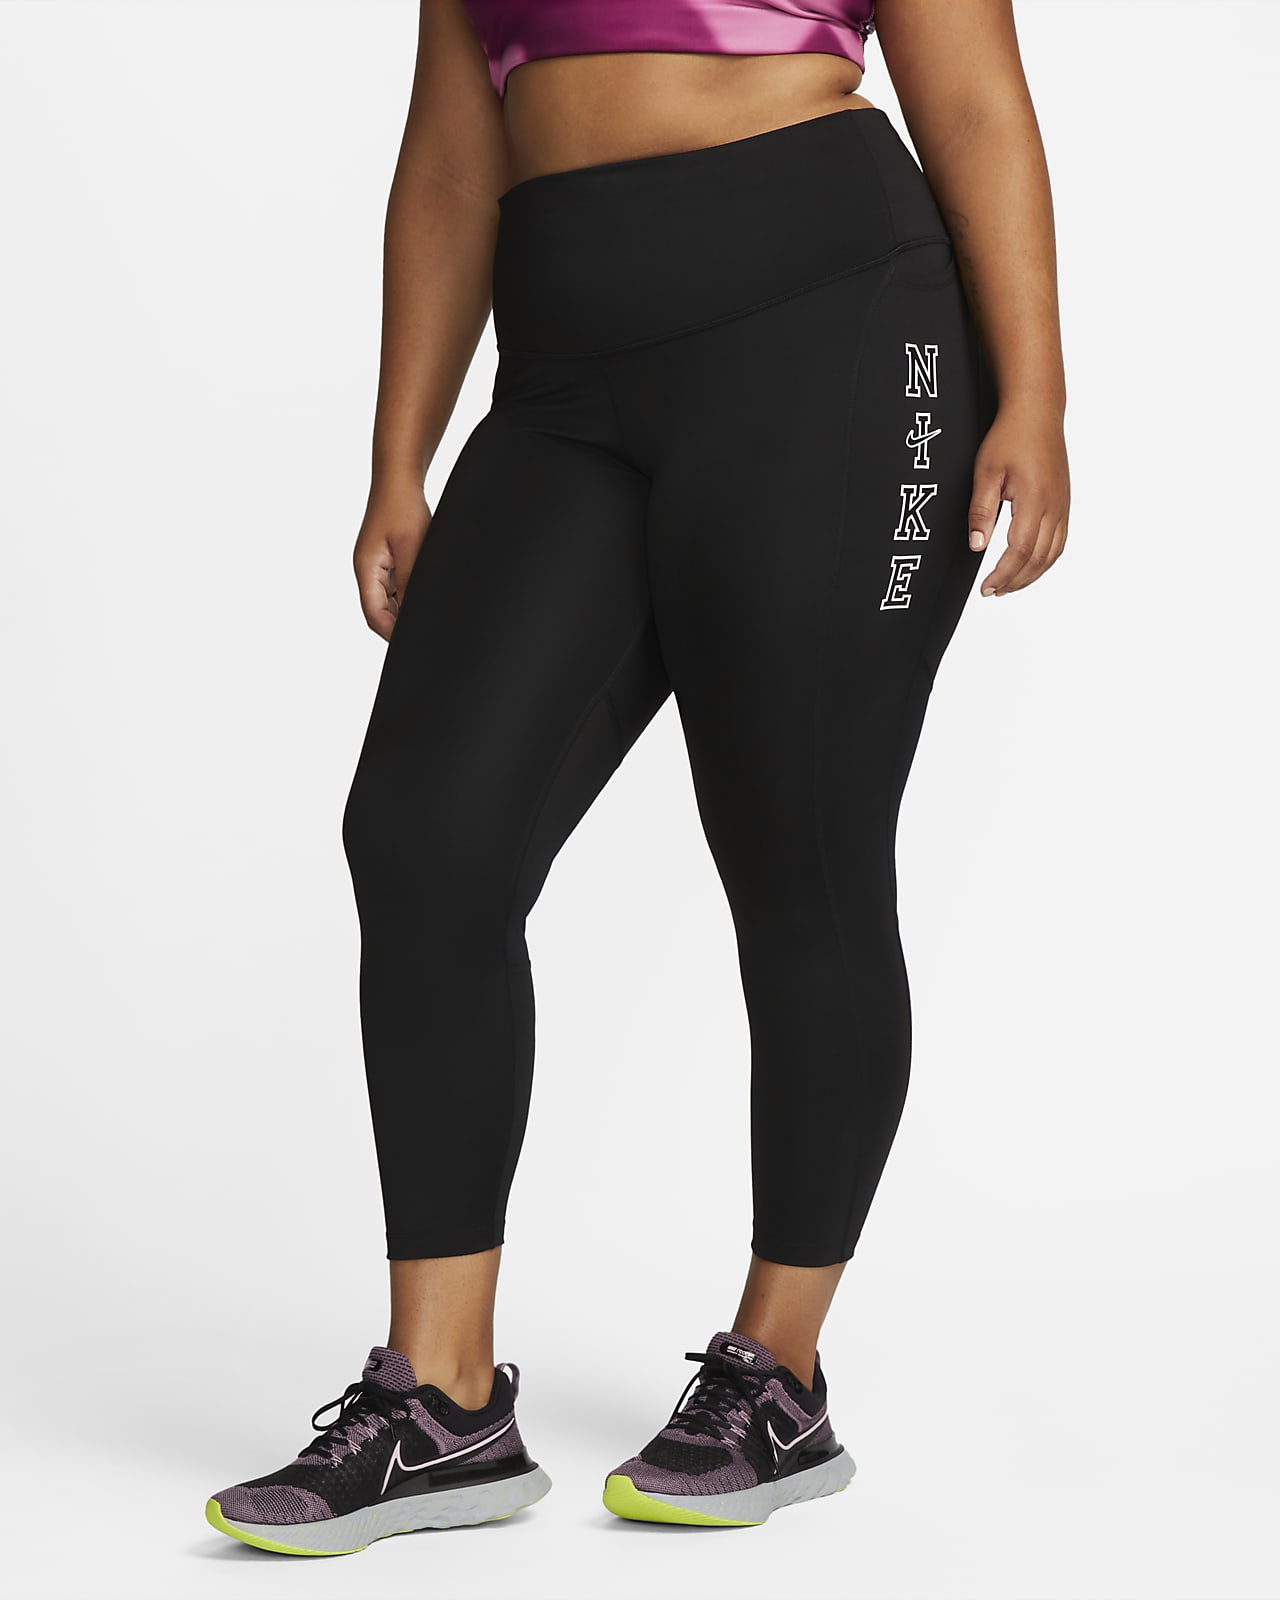 Legging de running taille mi-haute Nike Epic Fast pour femme (grande taille)